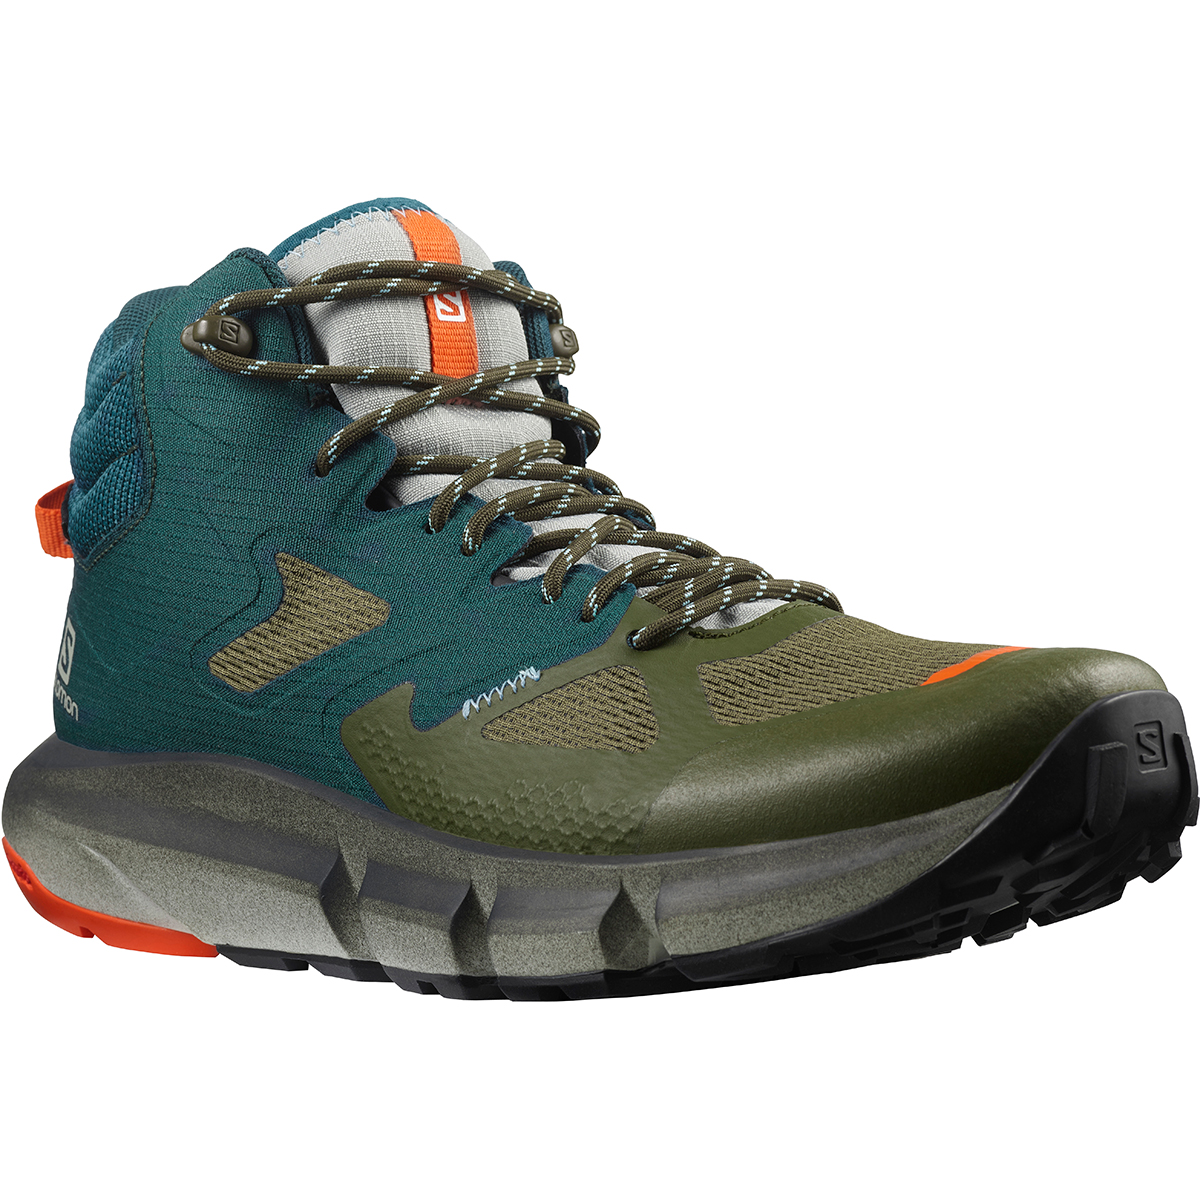 Salomon Men's Predict Hike Mid Gore-Tex Hiking Boot - Size 12